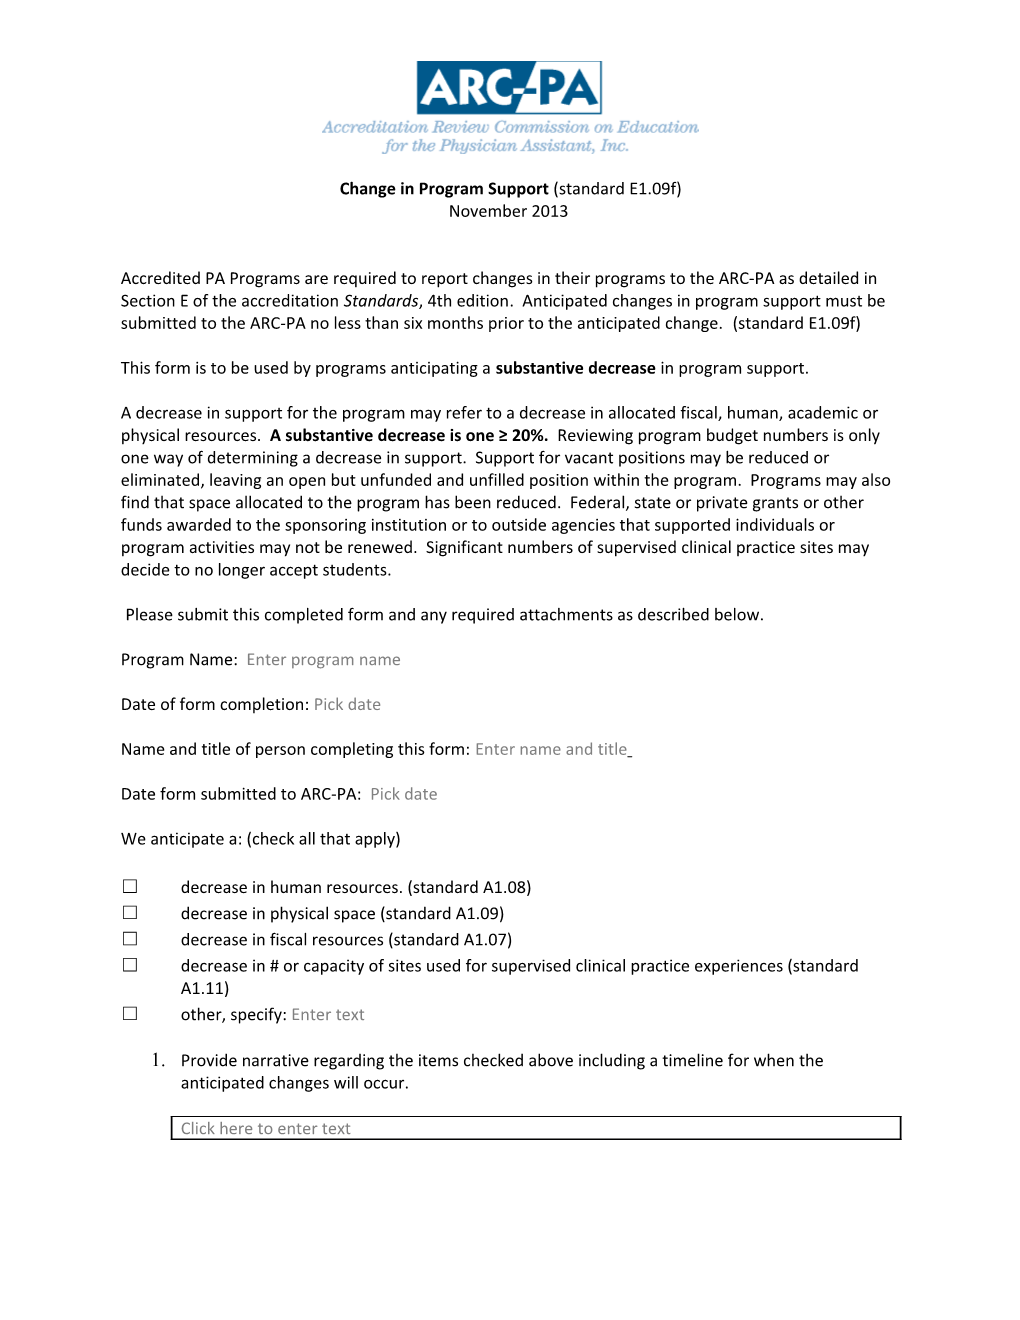 Program Change Form: Sponsorship Standards 4Th Edition Page 2